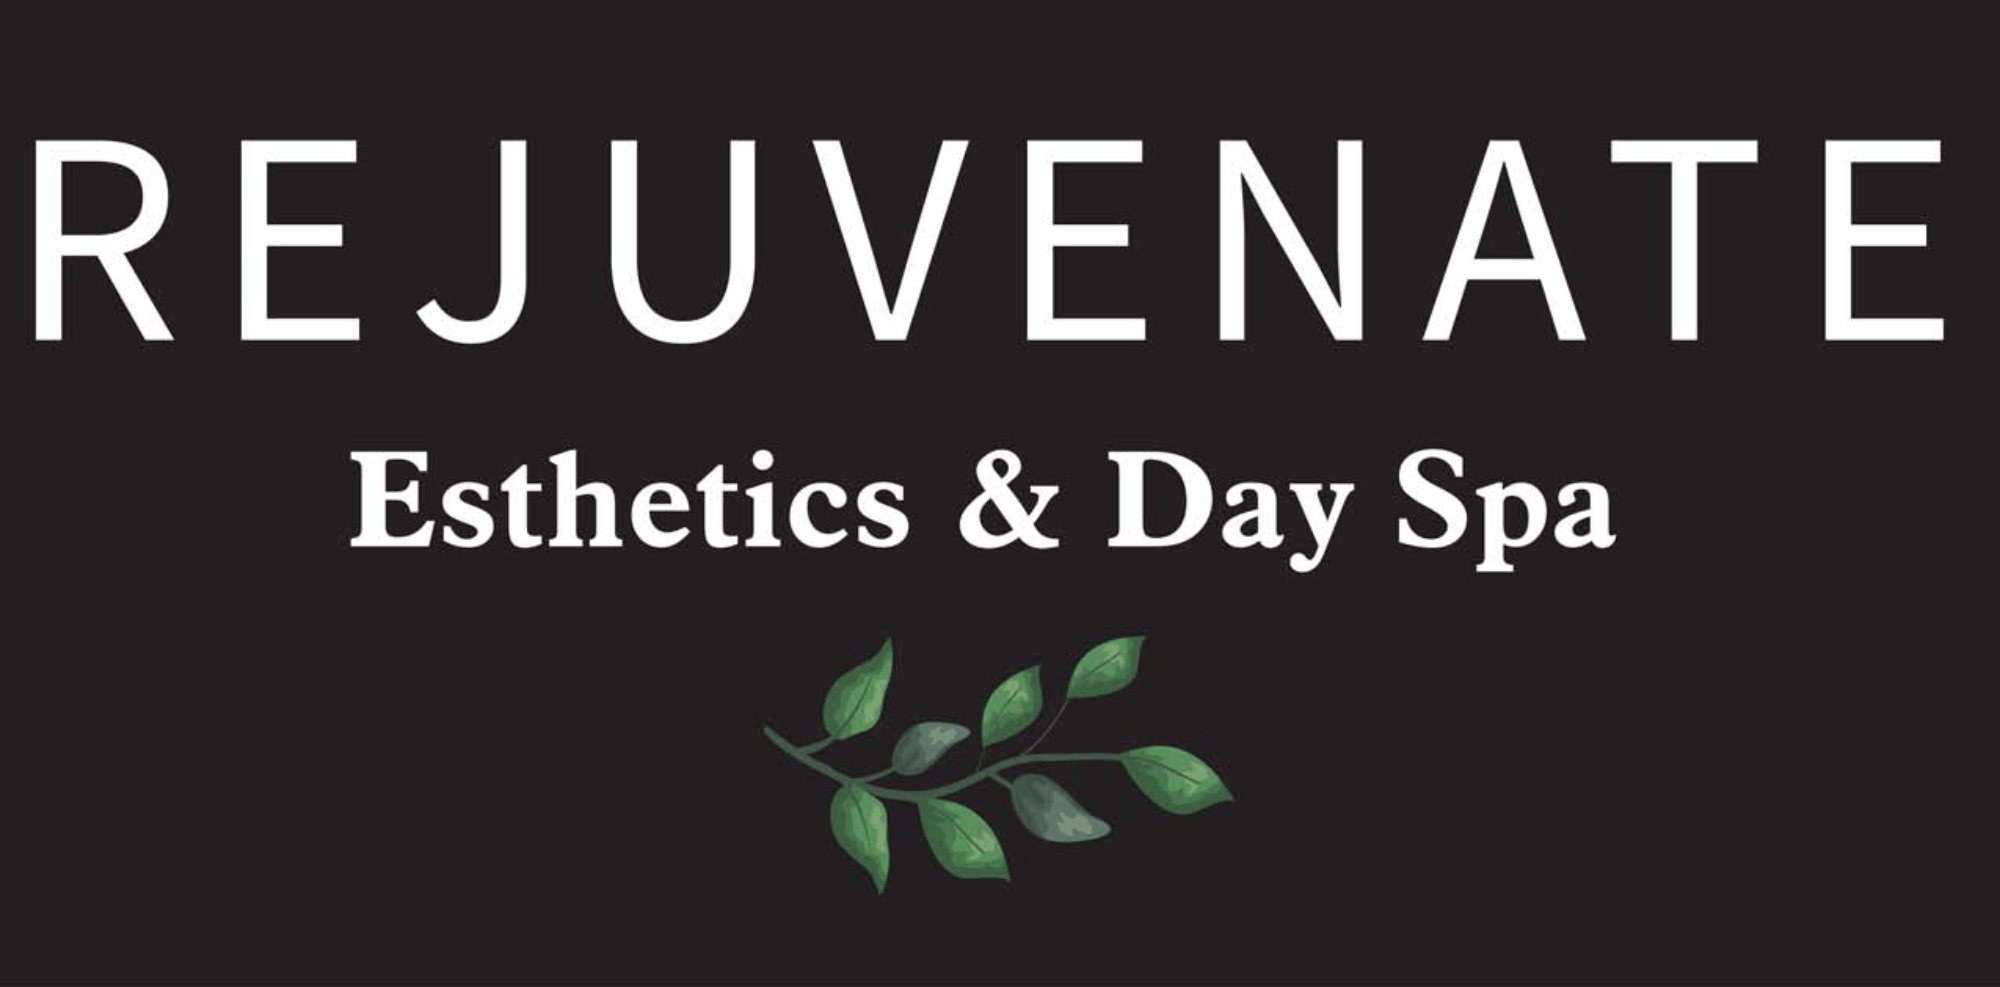 REJUVENATE Esthetics & Day Spa Logo